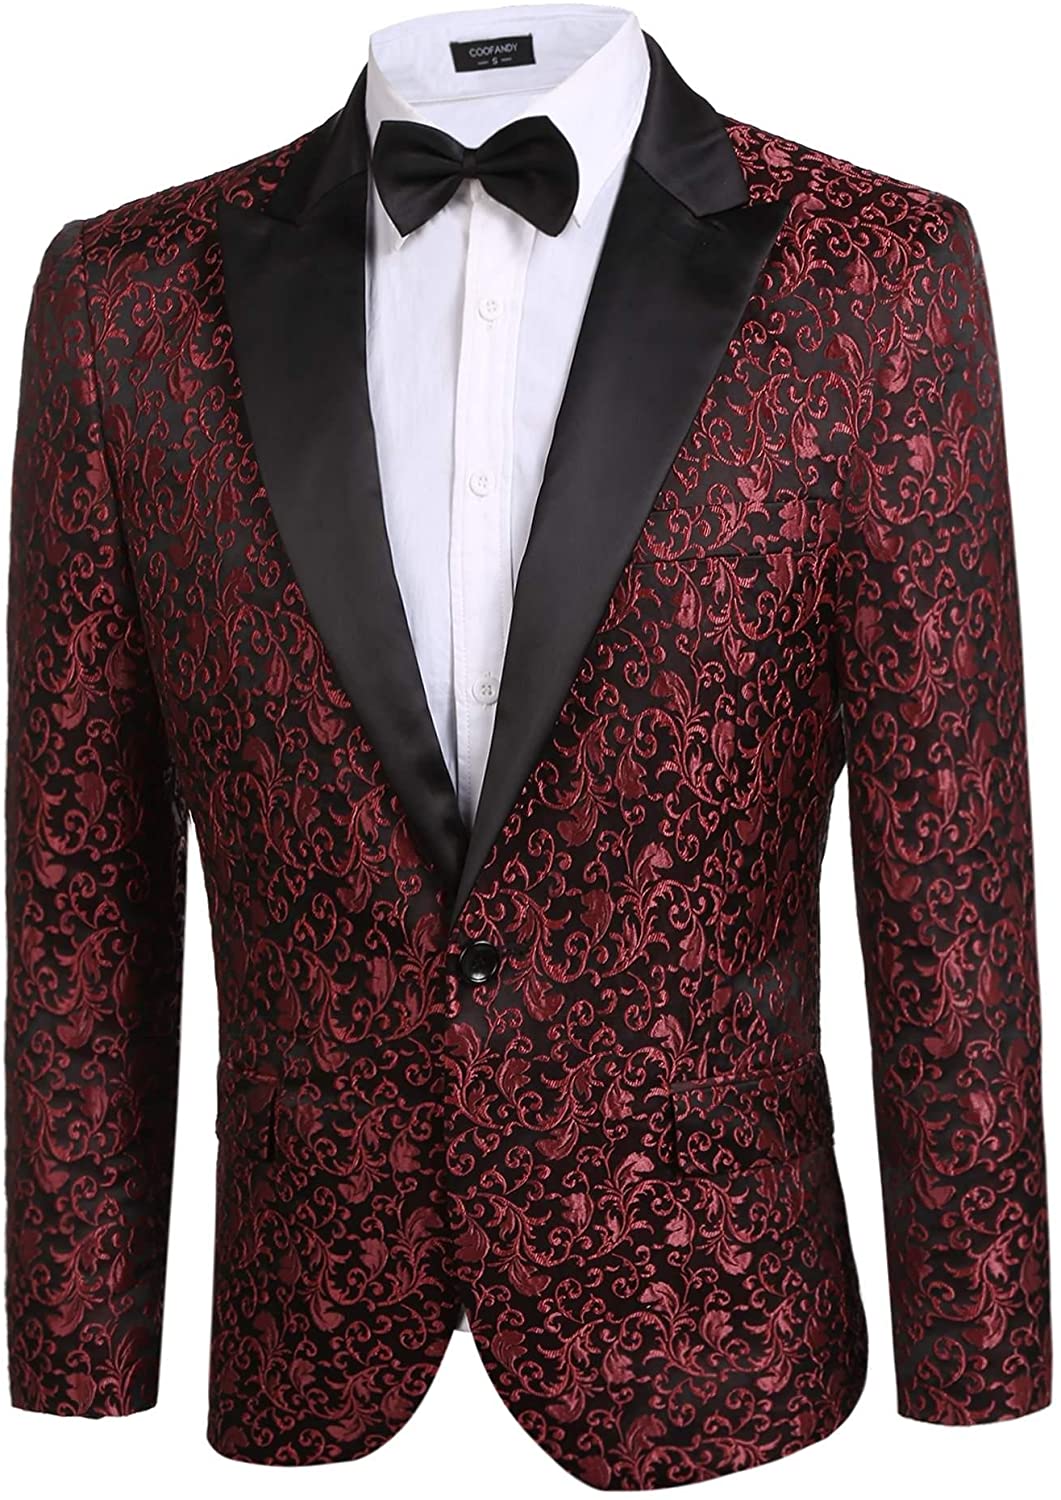 COOFANDY Men's Floral Party Dress Suit Stylish Dinner Jacket Wedding ...